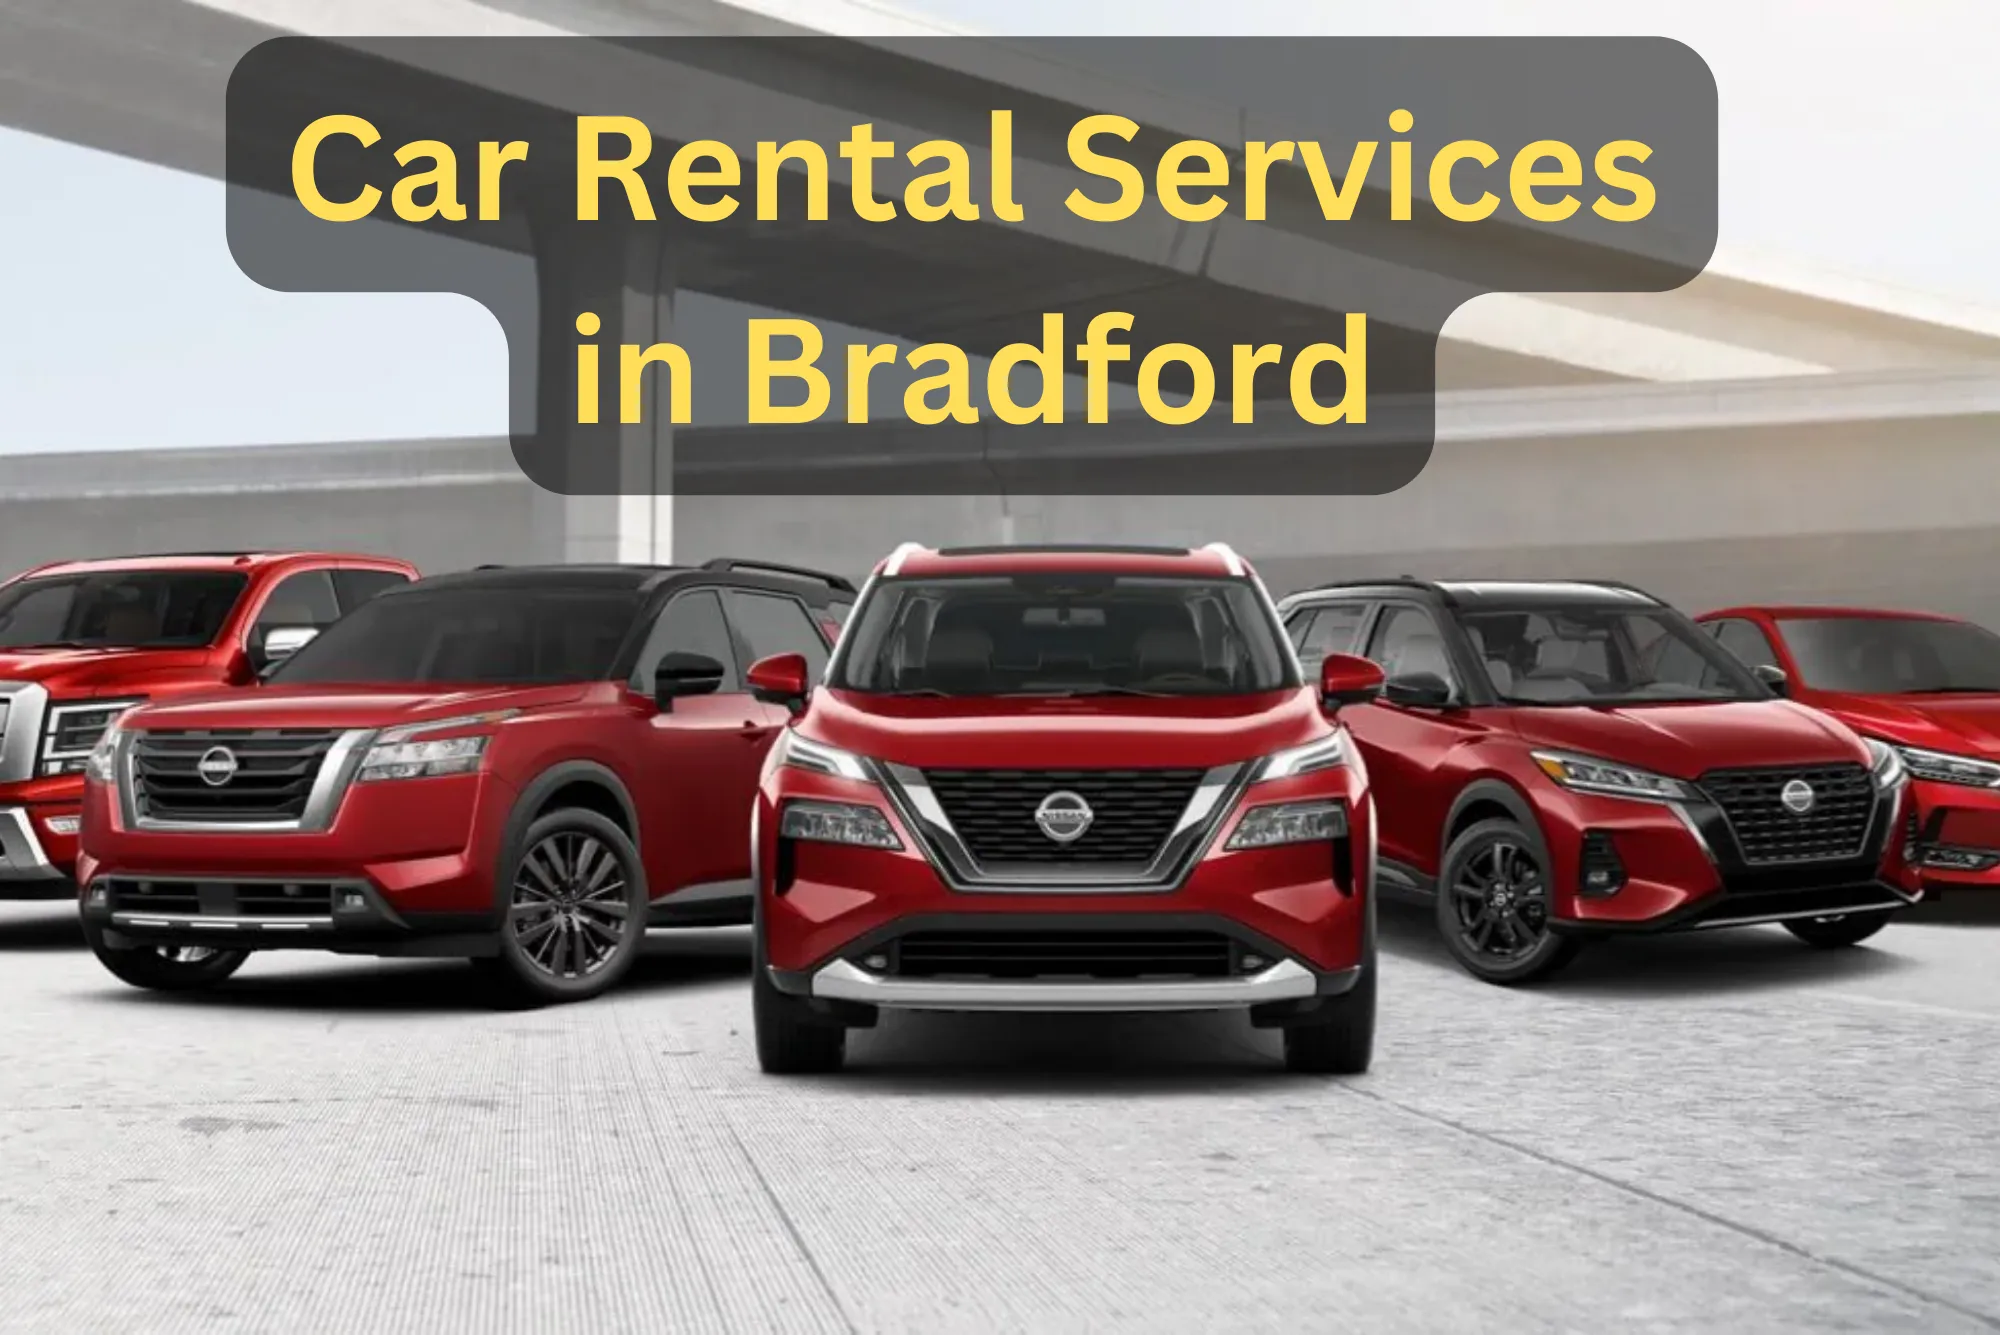 Car Rental Services in Bradford